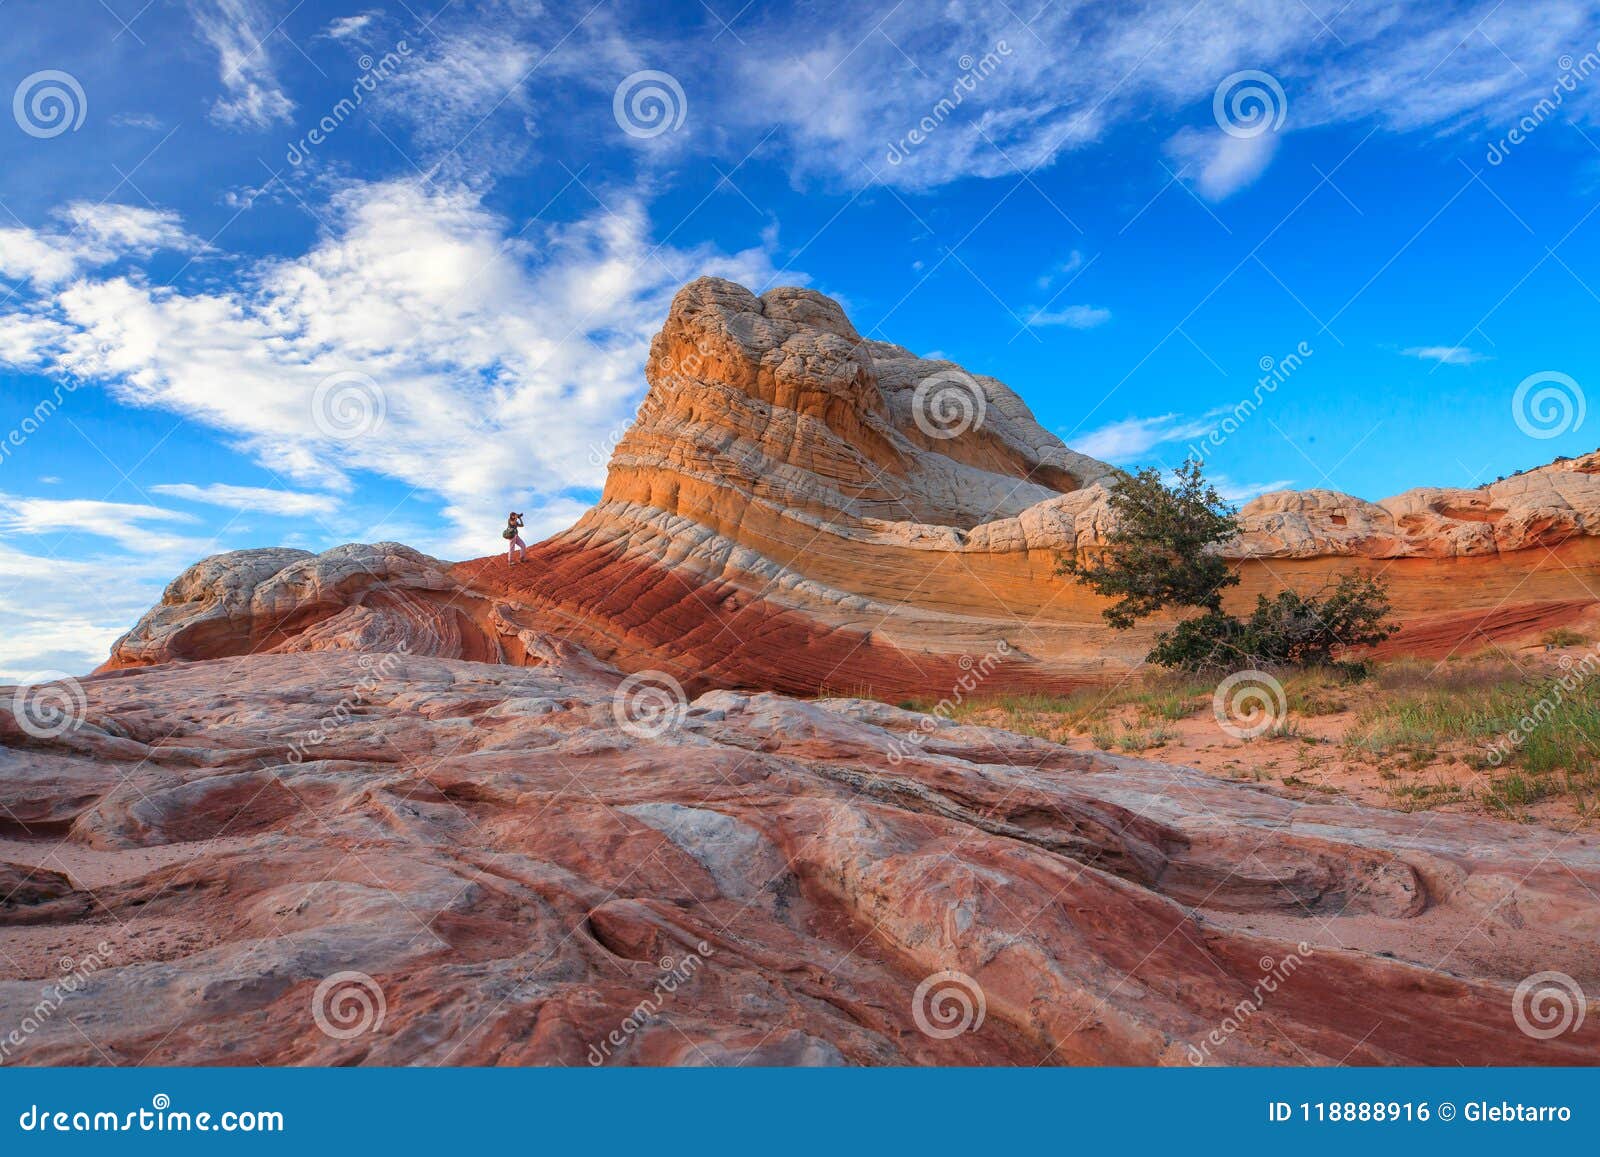 white pocket, vermilion cliffs national monument, arizona, usa